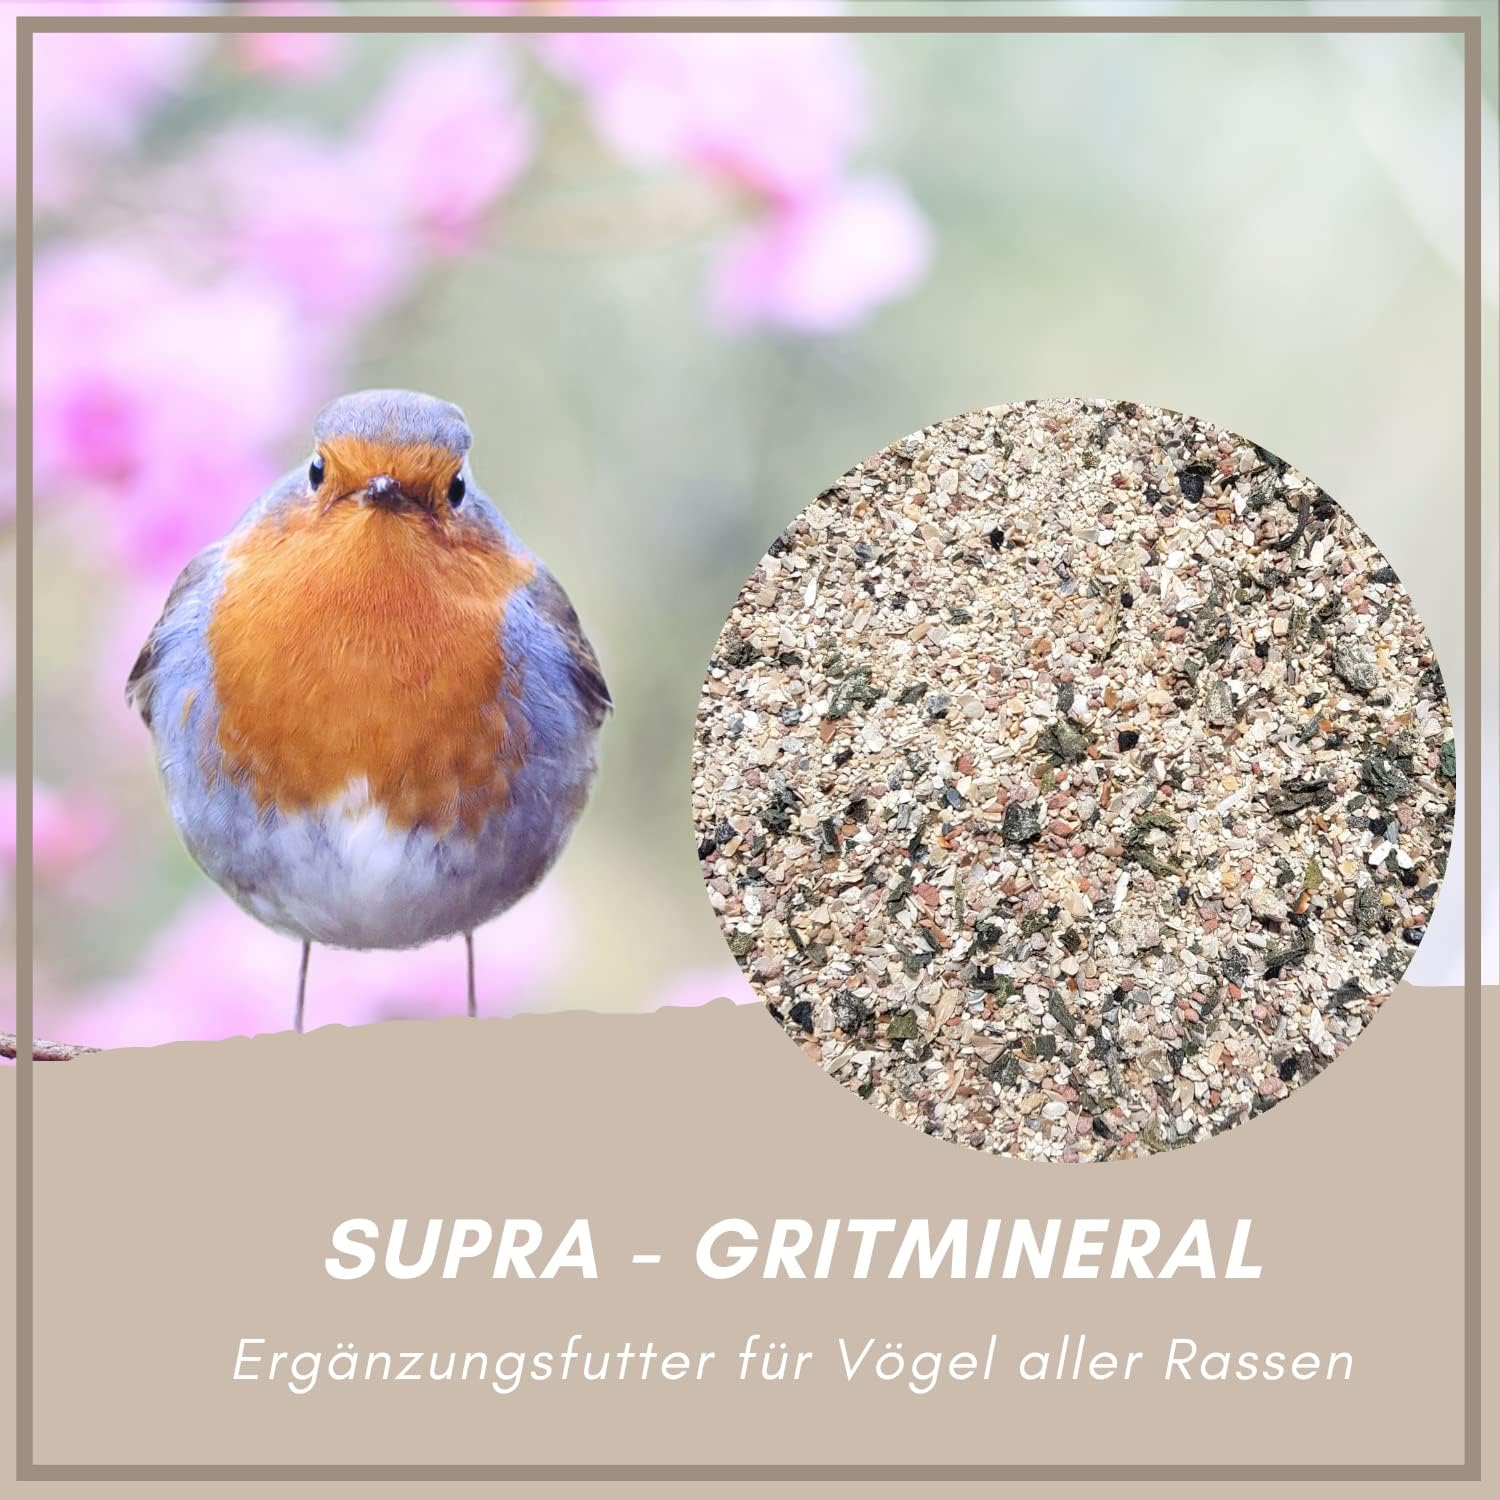 Supravit Supra-Gritmineral 650g Vogelgrit, Ergänzungsfutter für Vögel